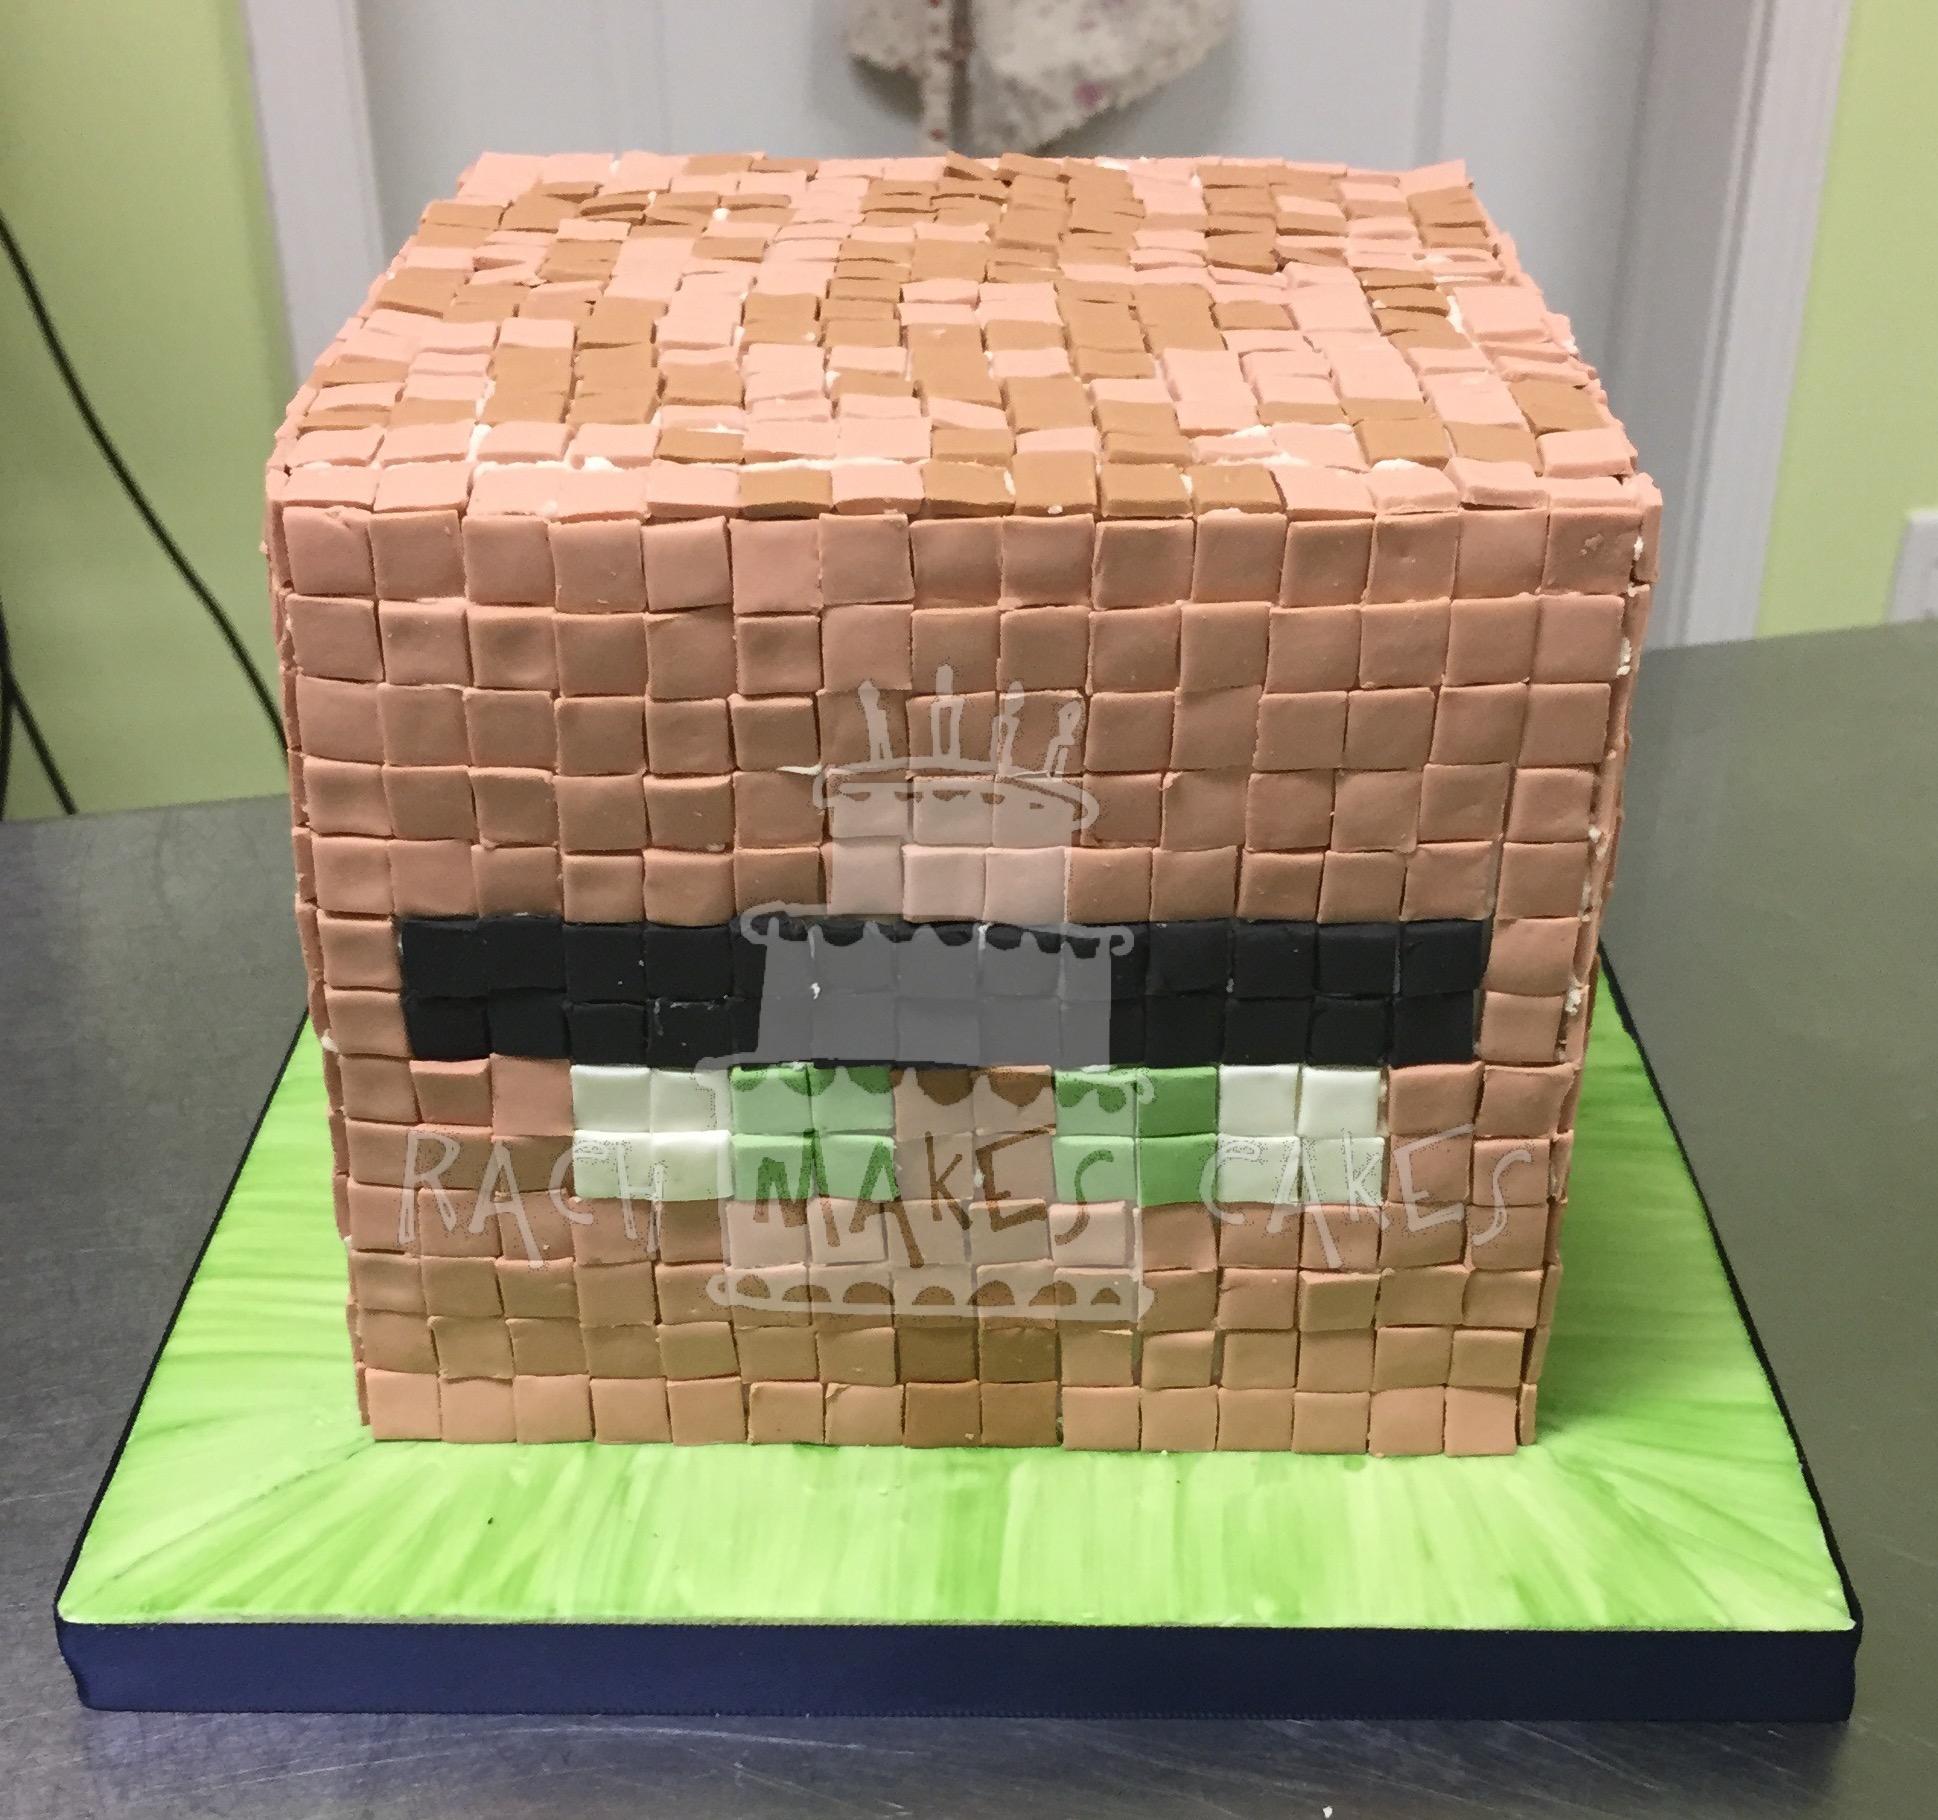 Minecraft Villager Cake — Rach Makes Cakes - 1938 x 1820 jpeg 664kB